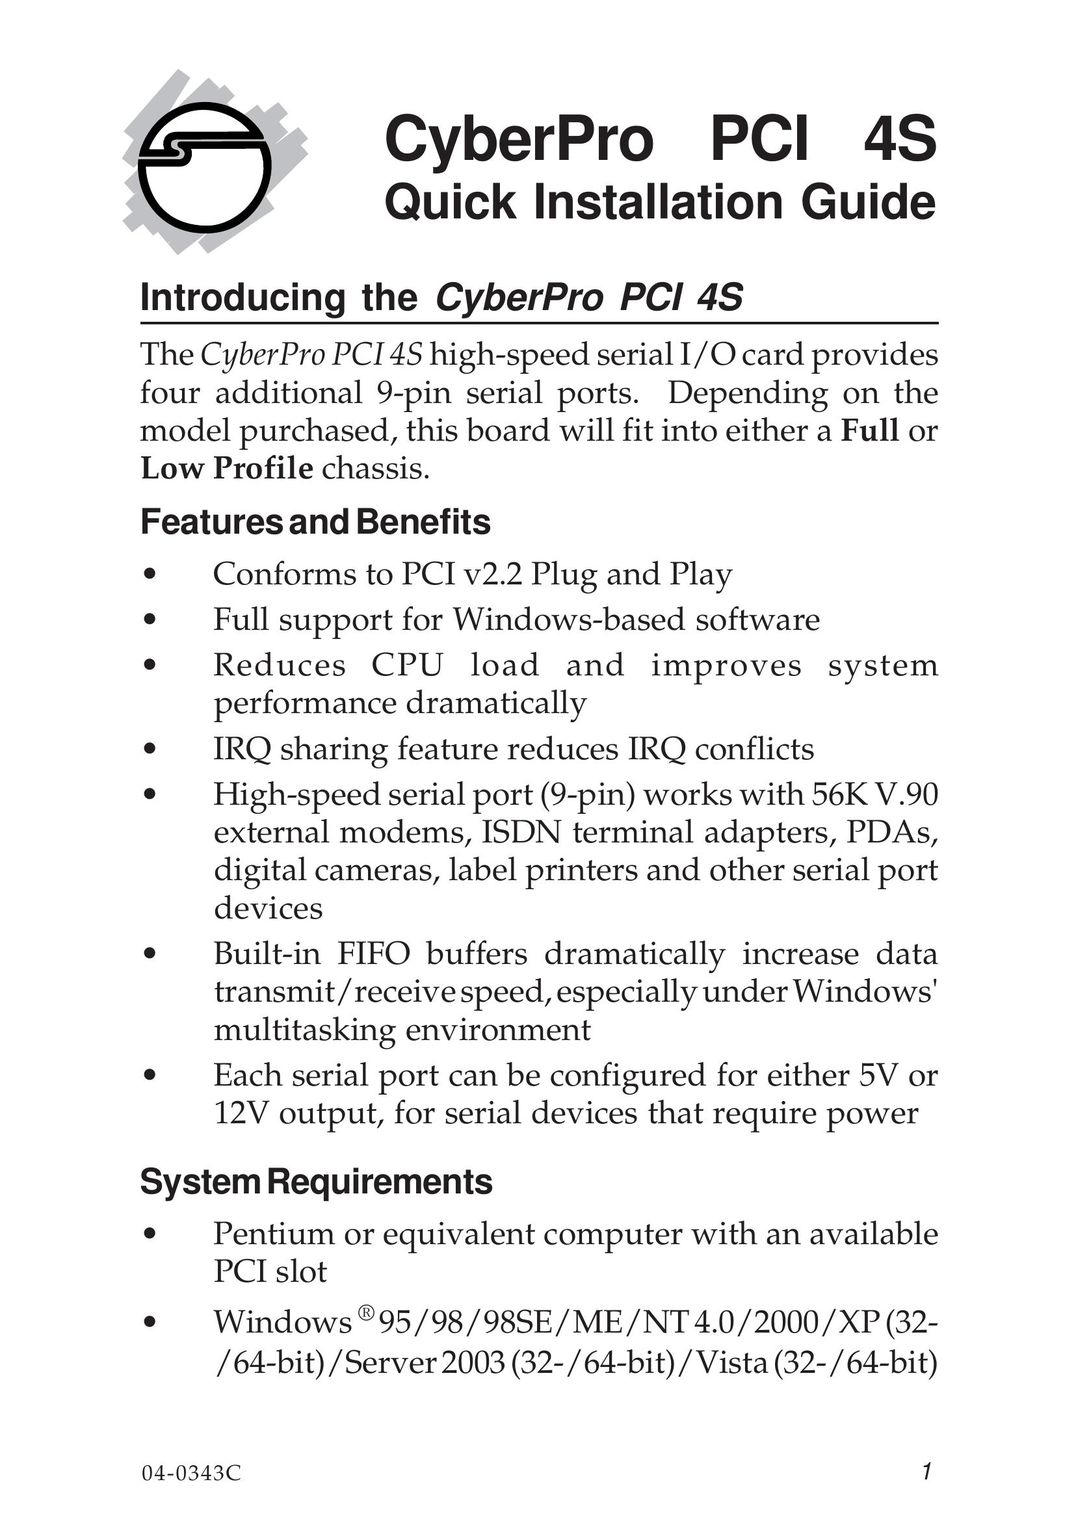 SIIG 04-0343C Computer Hardware User Manual